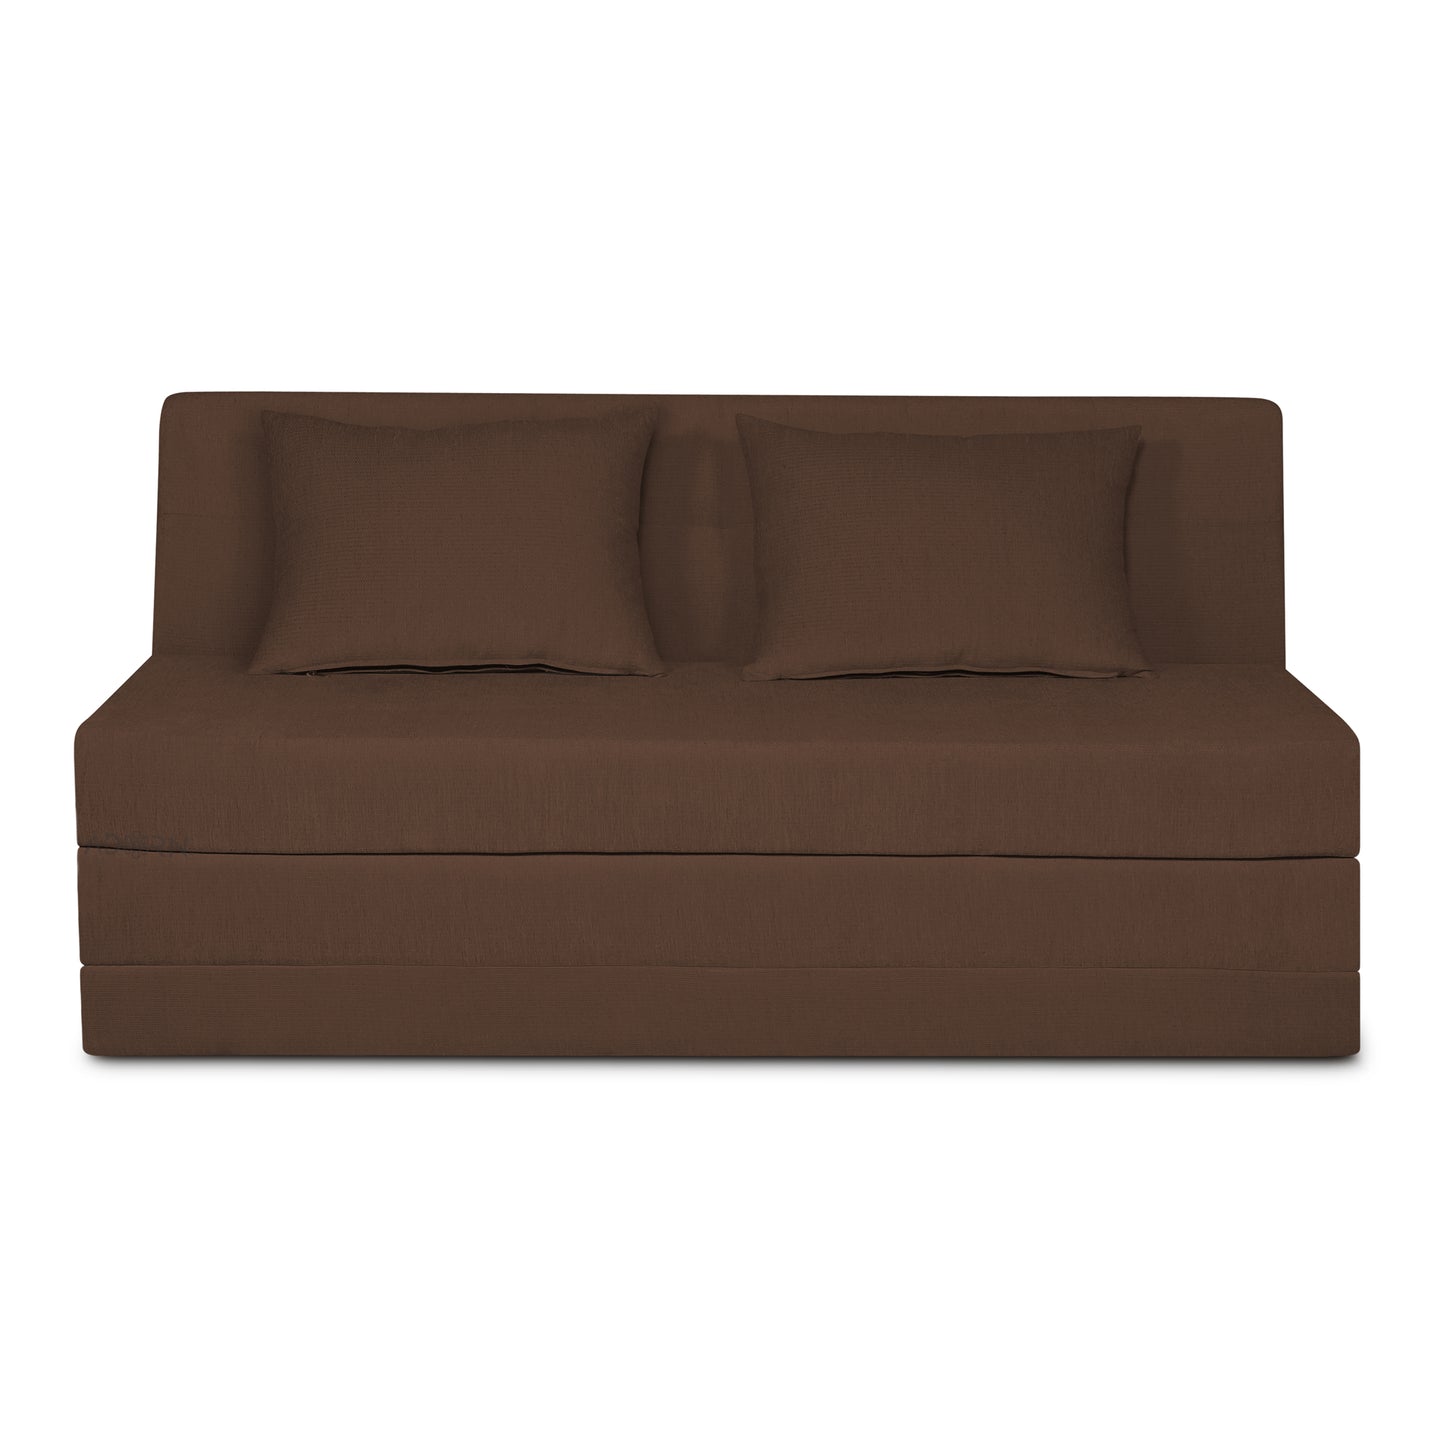 Adorn India Easy Highback Three Seater Sofa Cum Bed Decent 6' x 6' (Brown)